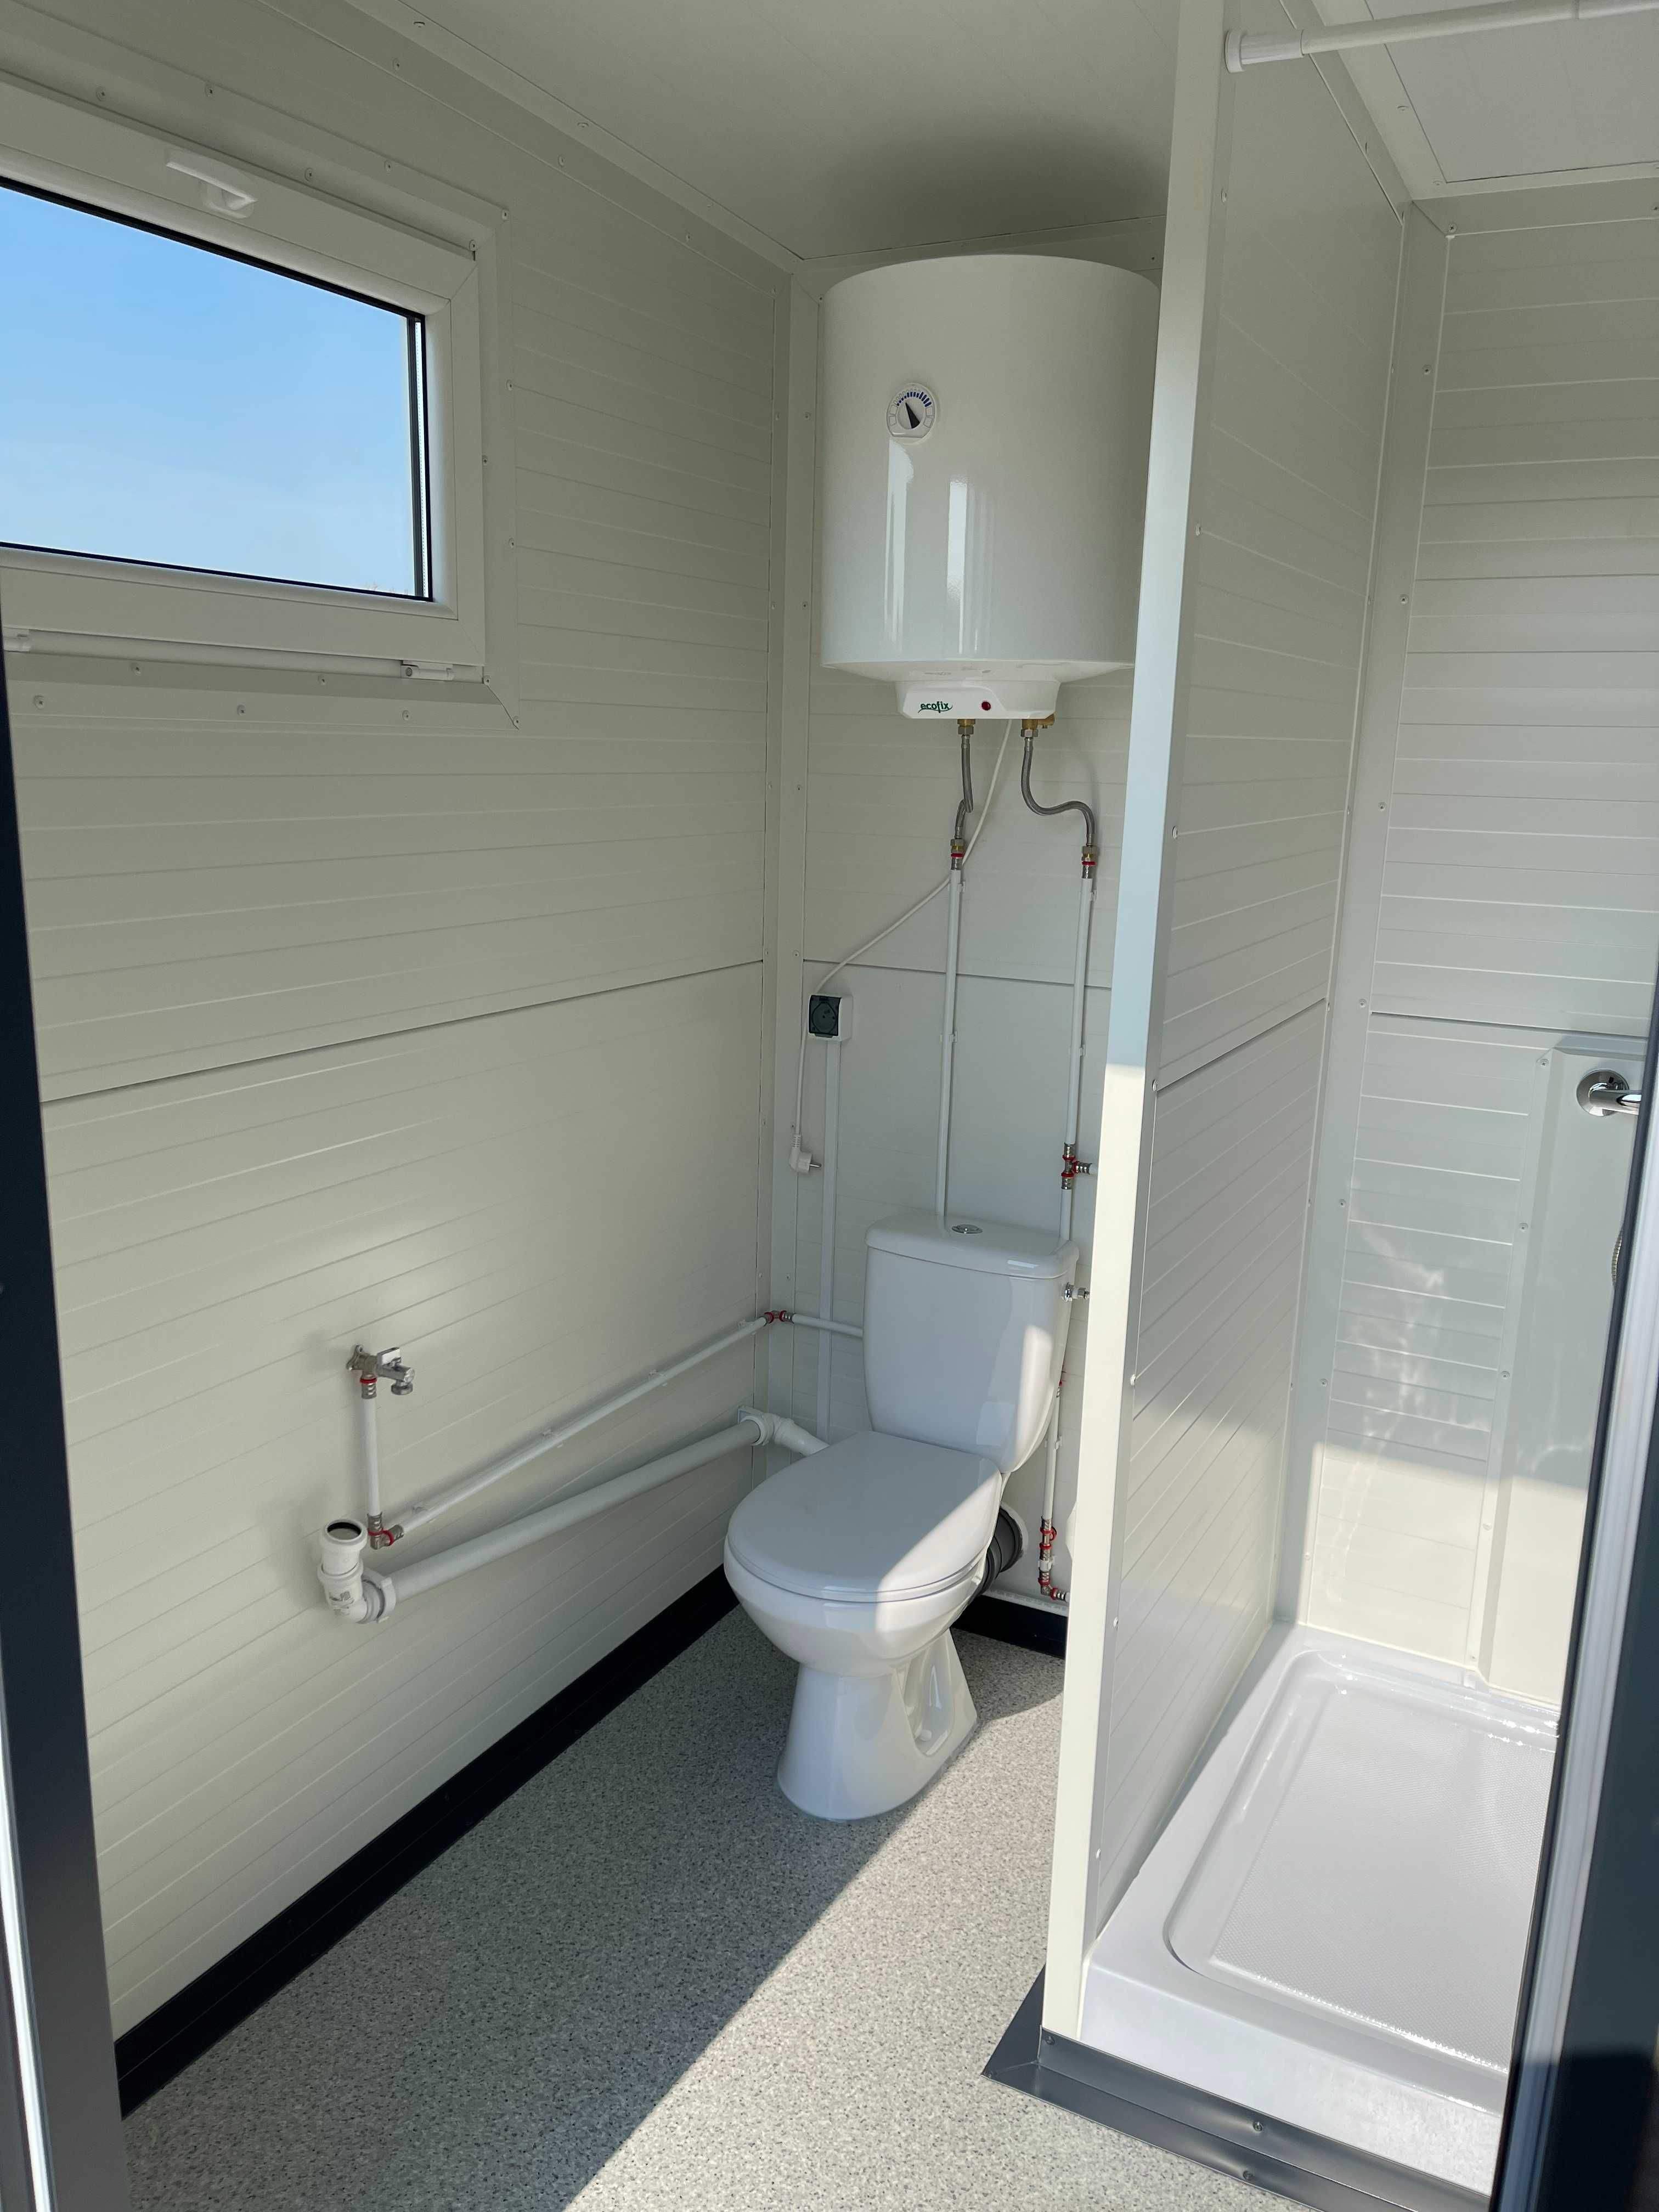 Kontener sanitarny toaleta prysznic natrysk CAMPIONG łazienka